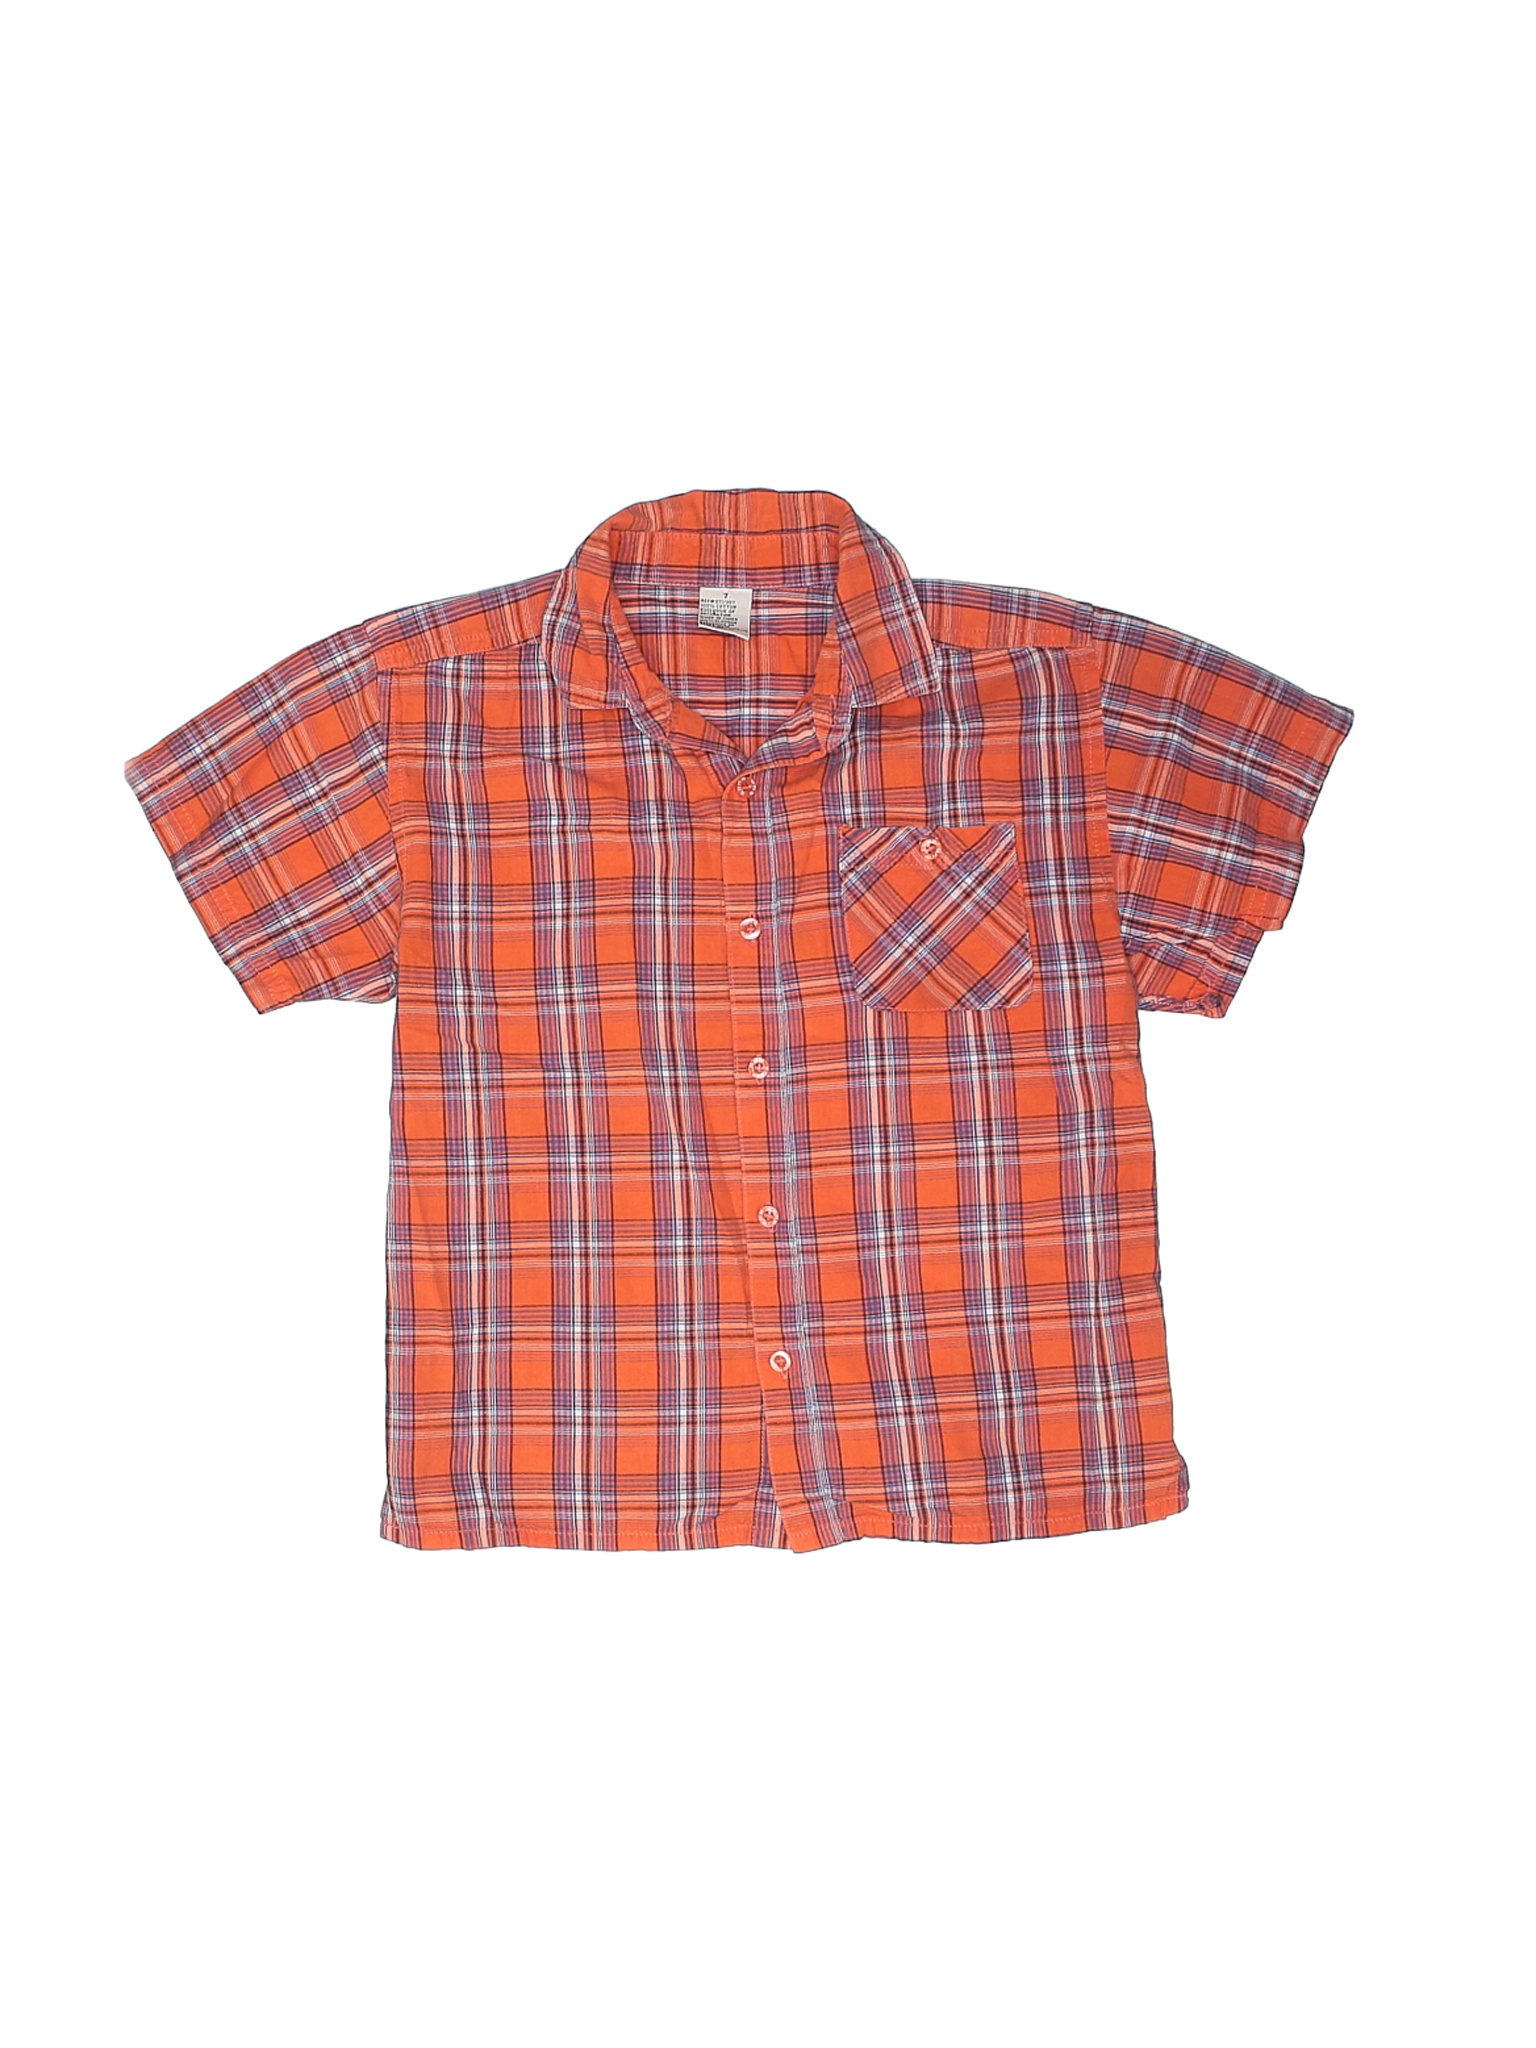 Unbranded Boys Orange Short Sleeve Button-Down Shirt 7 | eBay